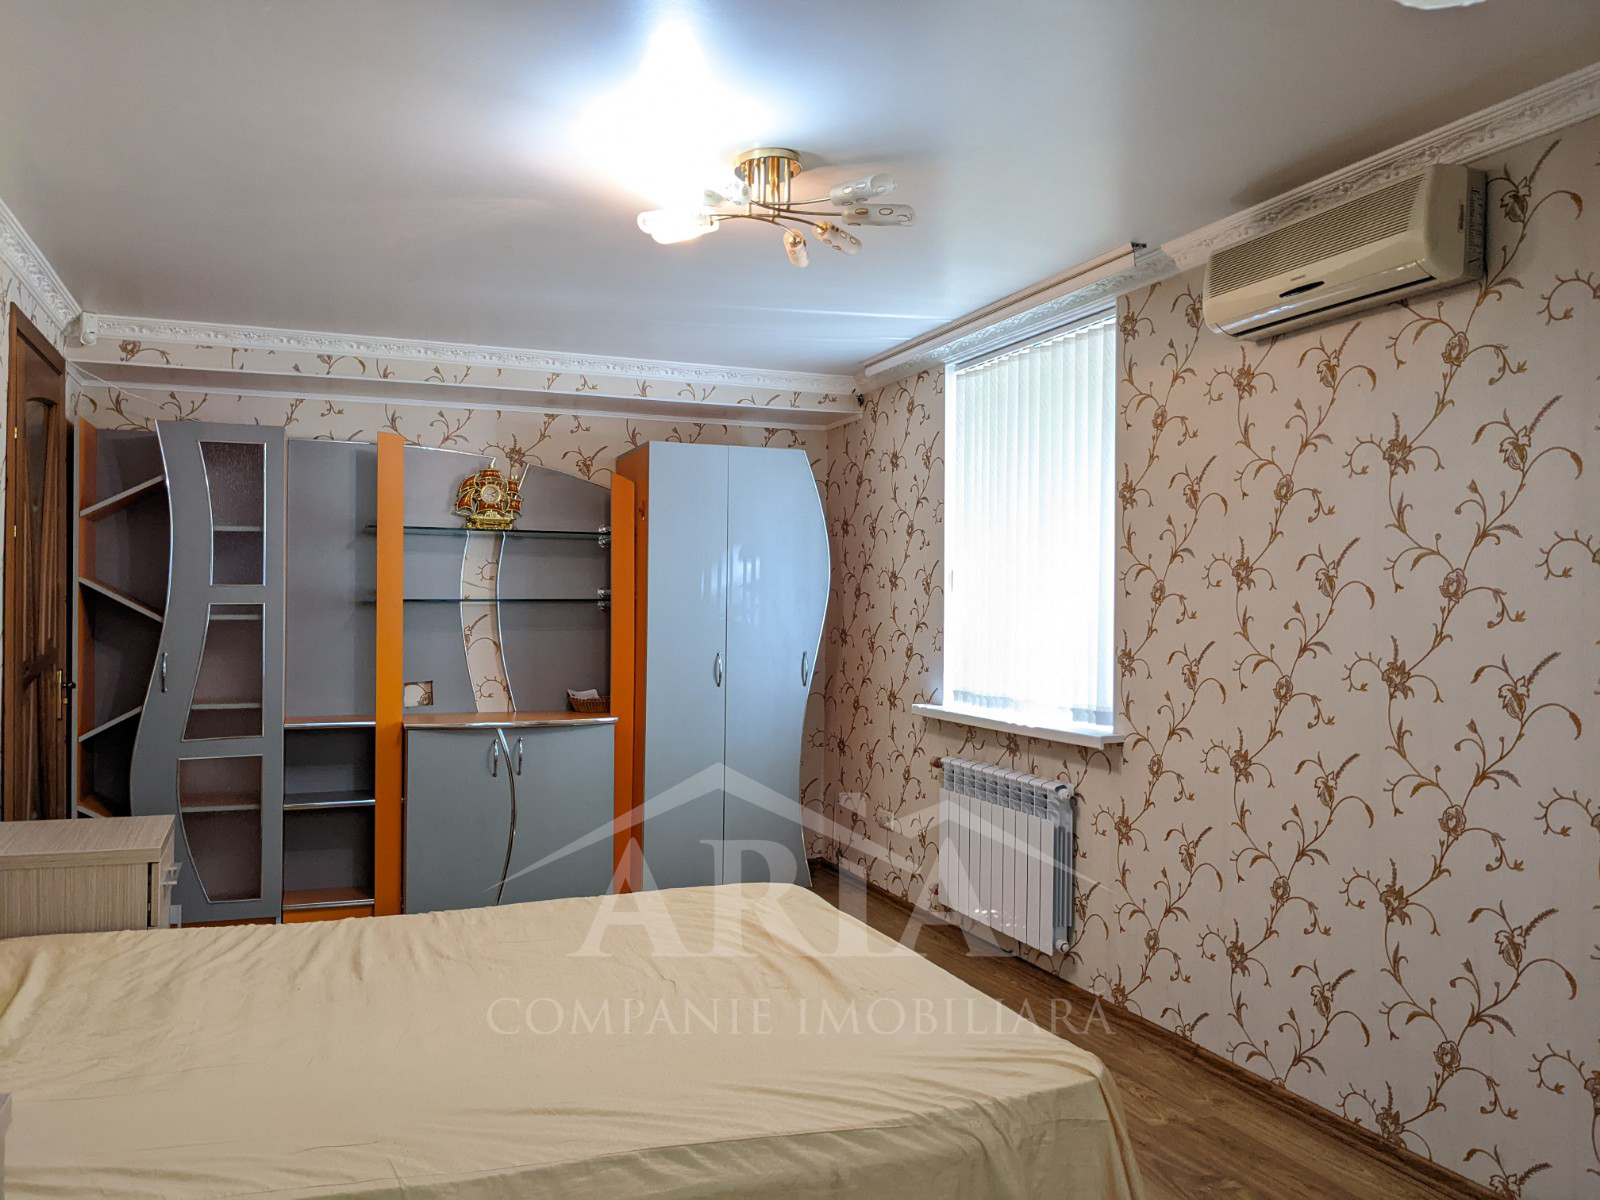 VÂNDUT Apartament de vânzare, Chișinău, sec. Poșta Veche, 1 odaie, euro reparat, 40m2, et.1